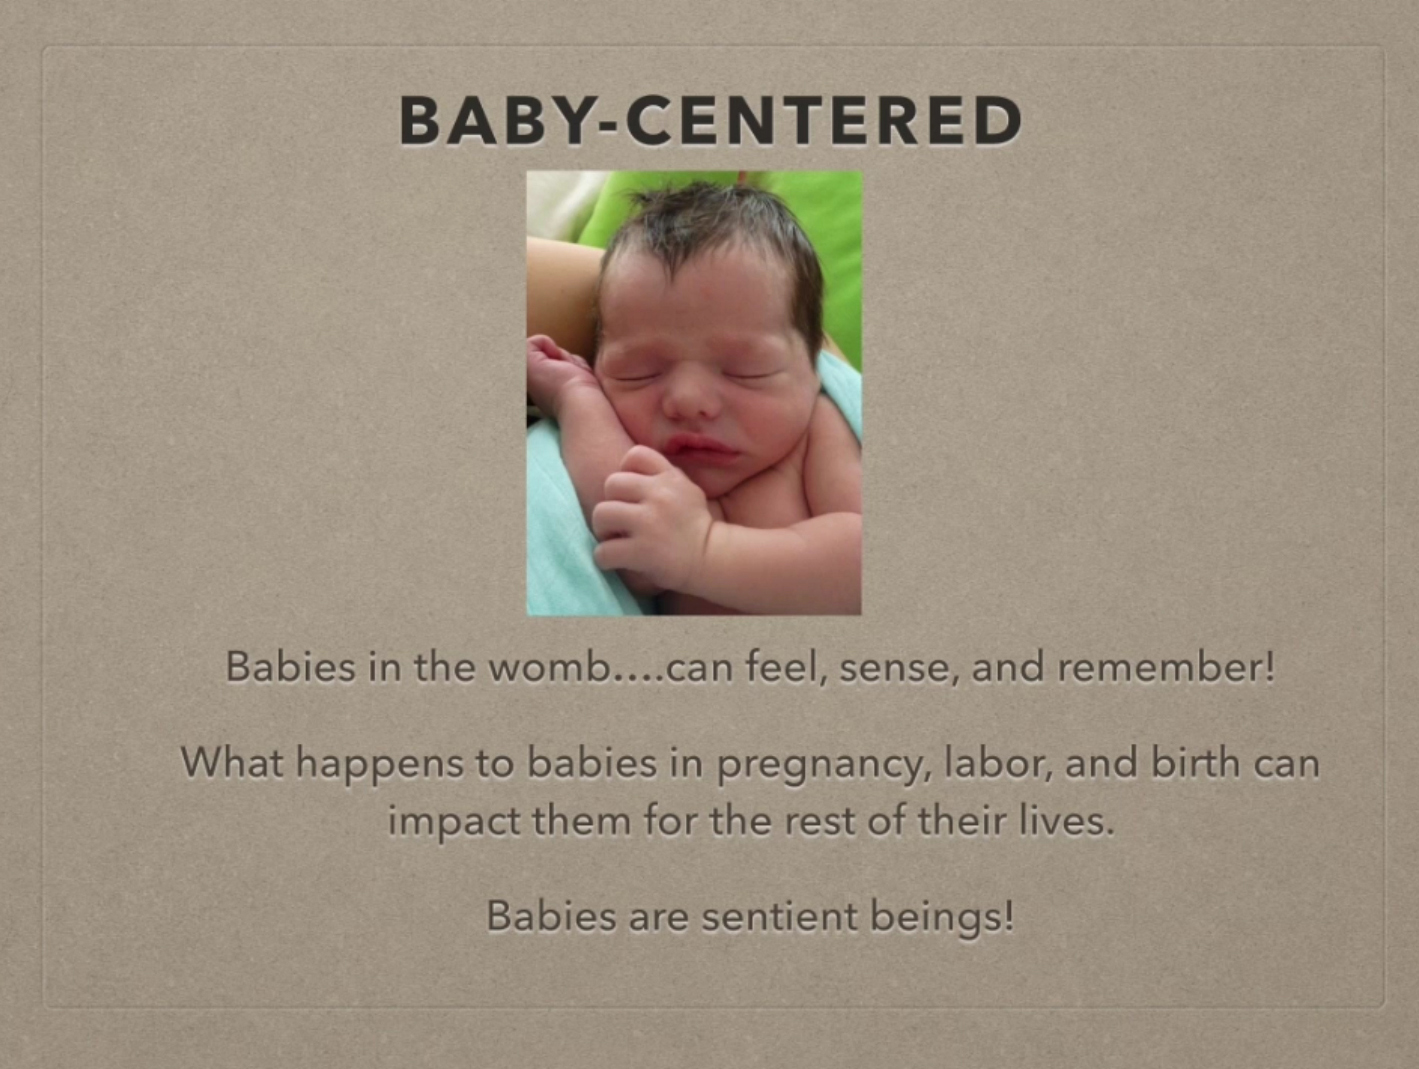 Francis_Woman_Baby Centered_screenshot